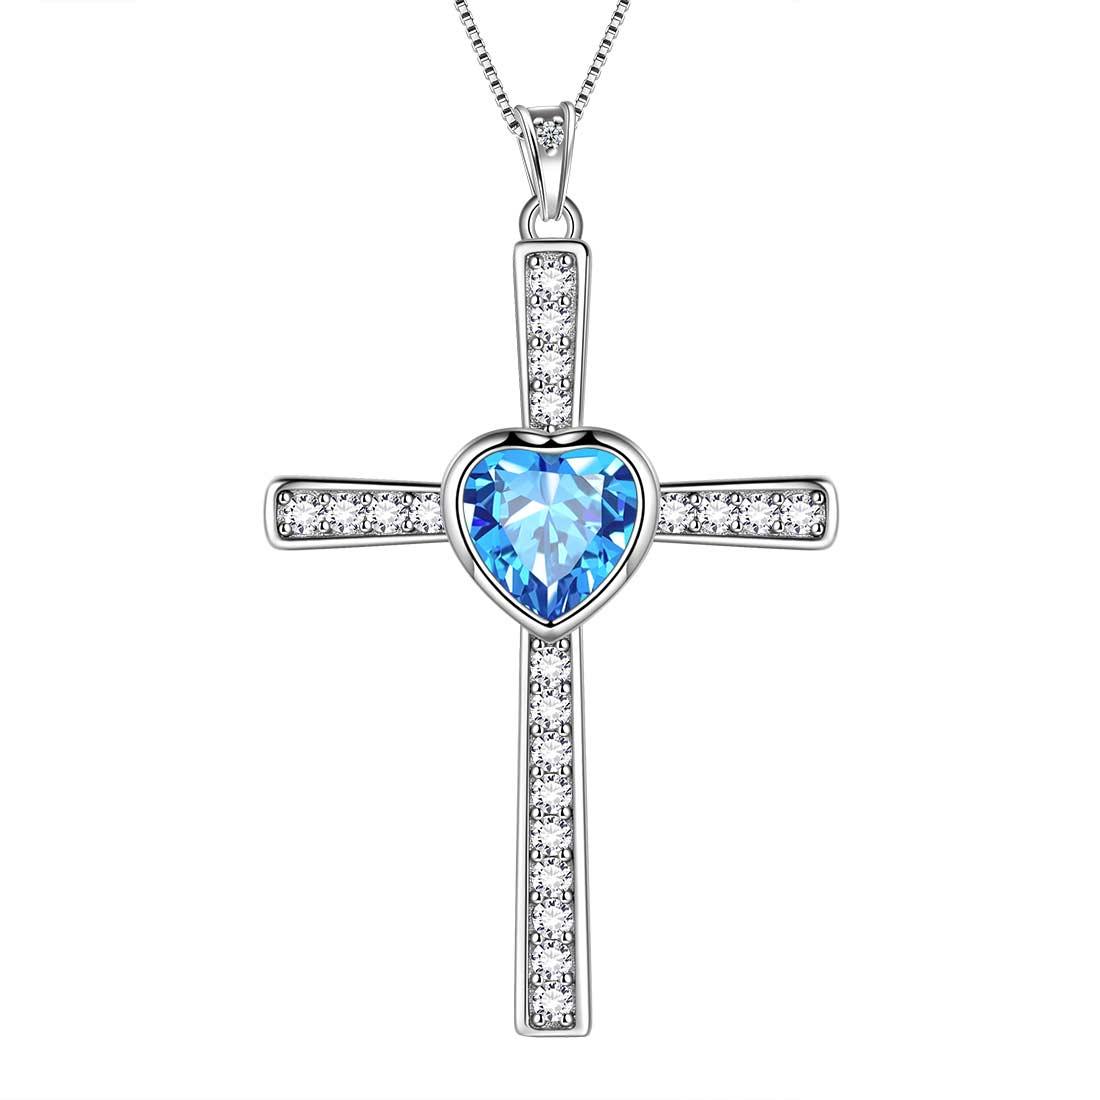 Heart Birthstone March Aquamarine Cross Necklace - Necklaces - Aurora Tears